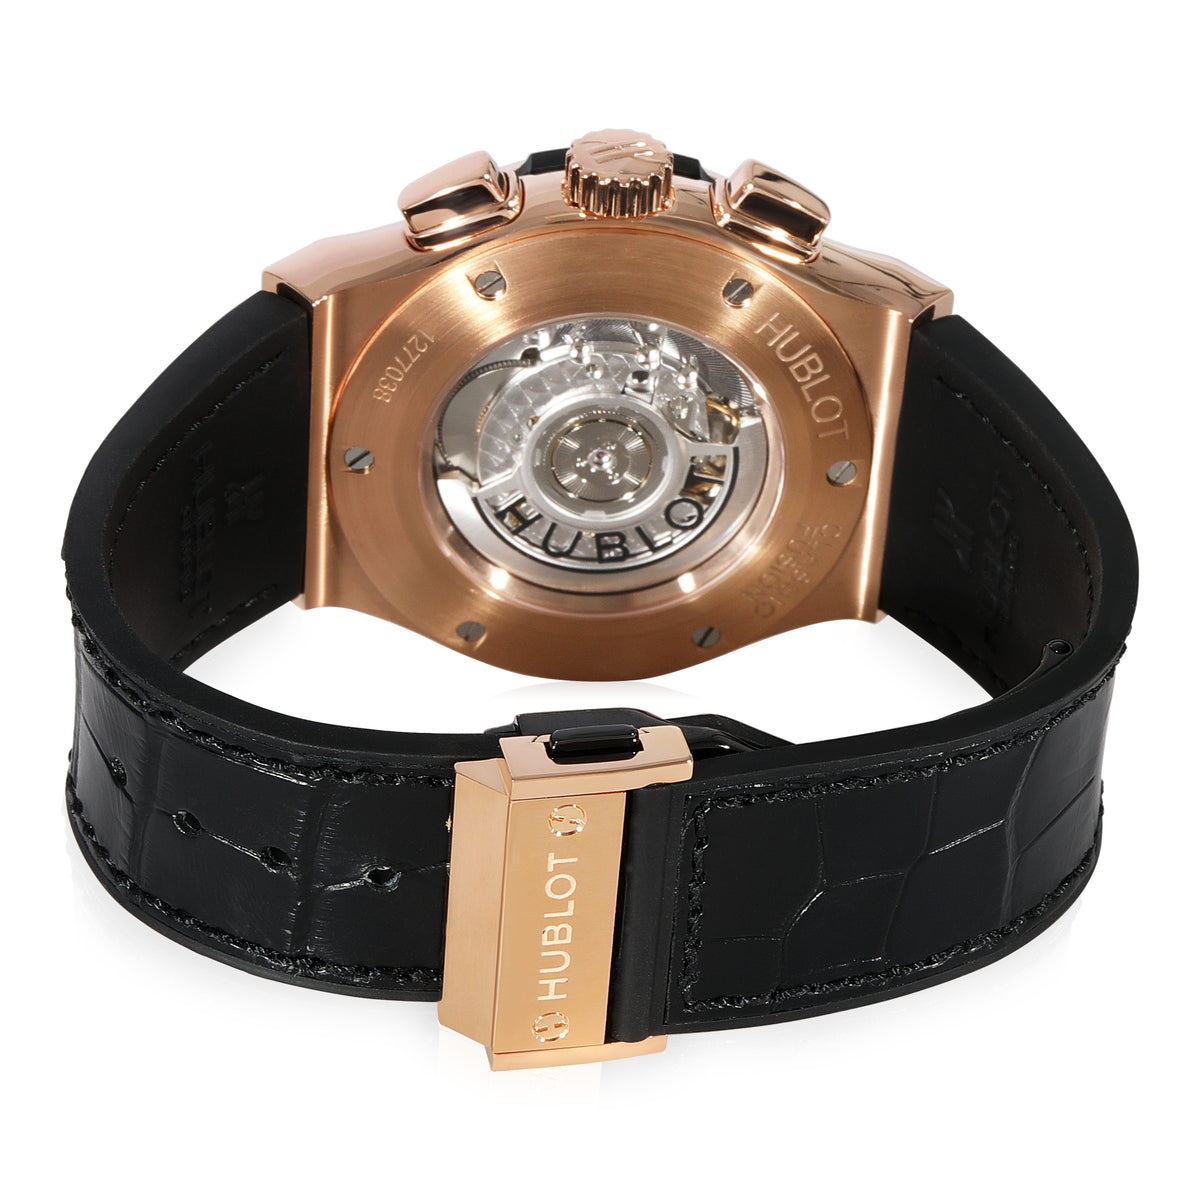 Hublot Classic Fusion 525.OX.0180.LR Men's Watch in 18kt Rose Gold